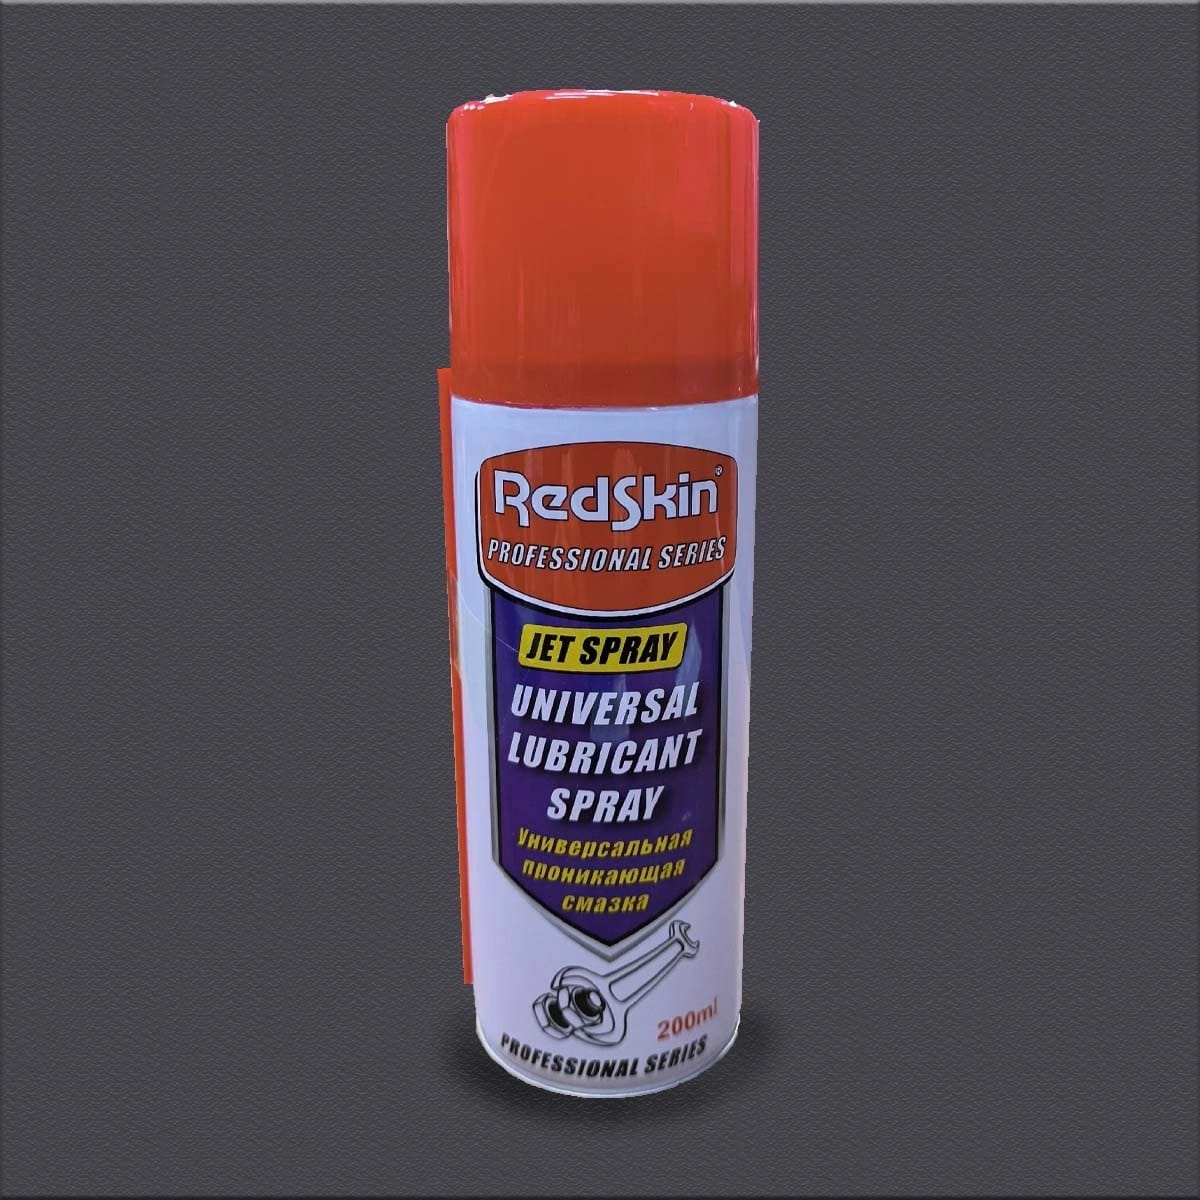 Redskin Universal Lubricant Spray 200 мл. проникающая смазка (1/24)